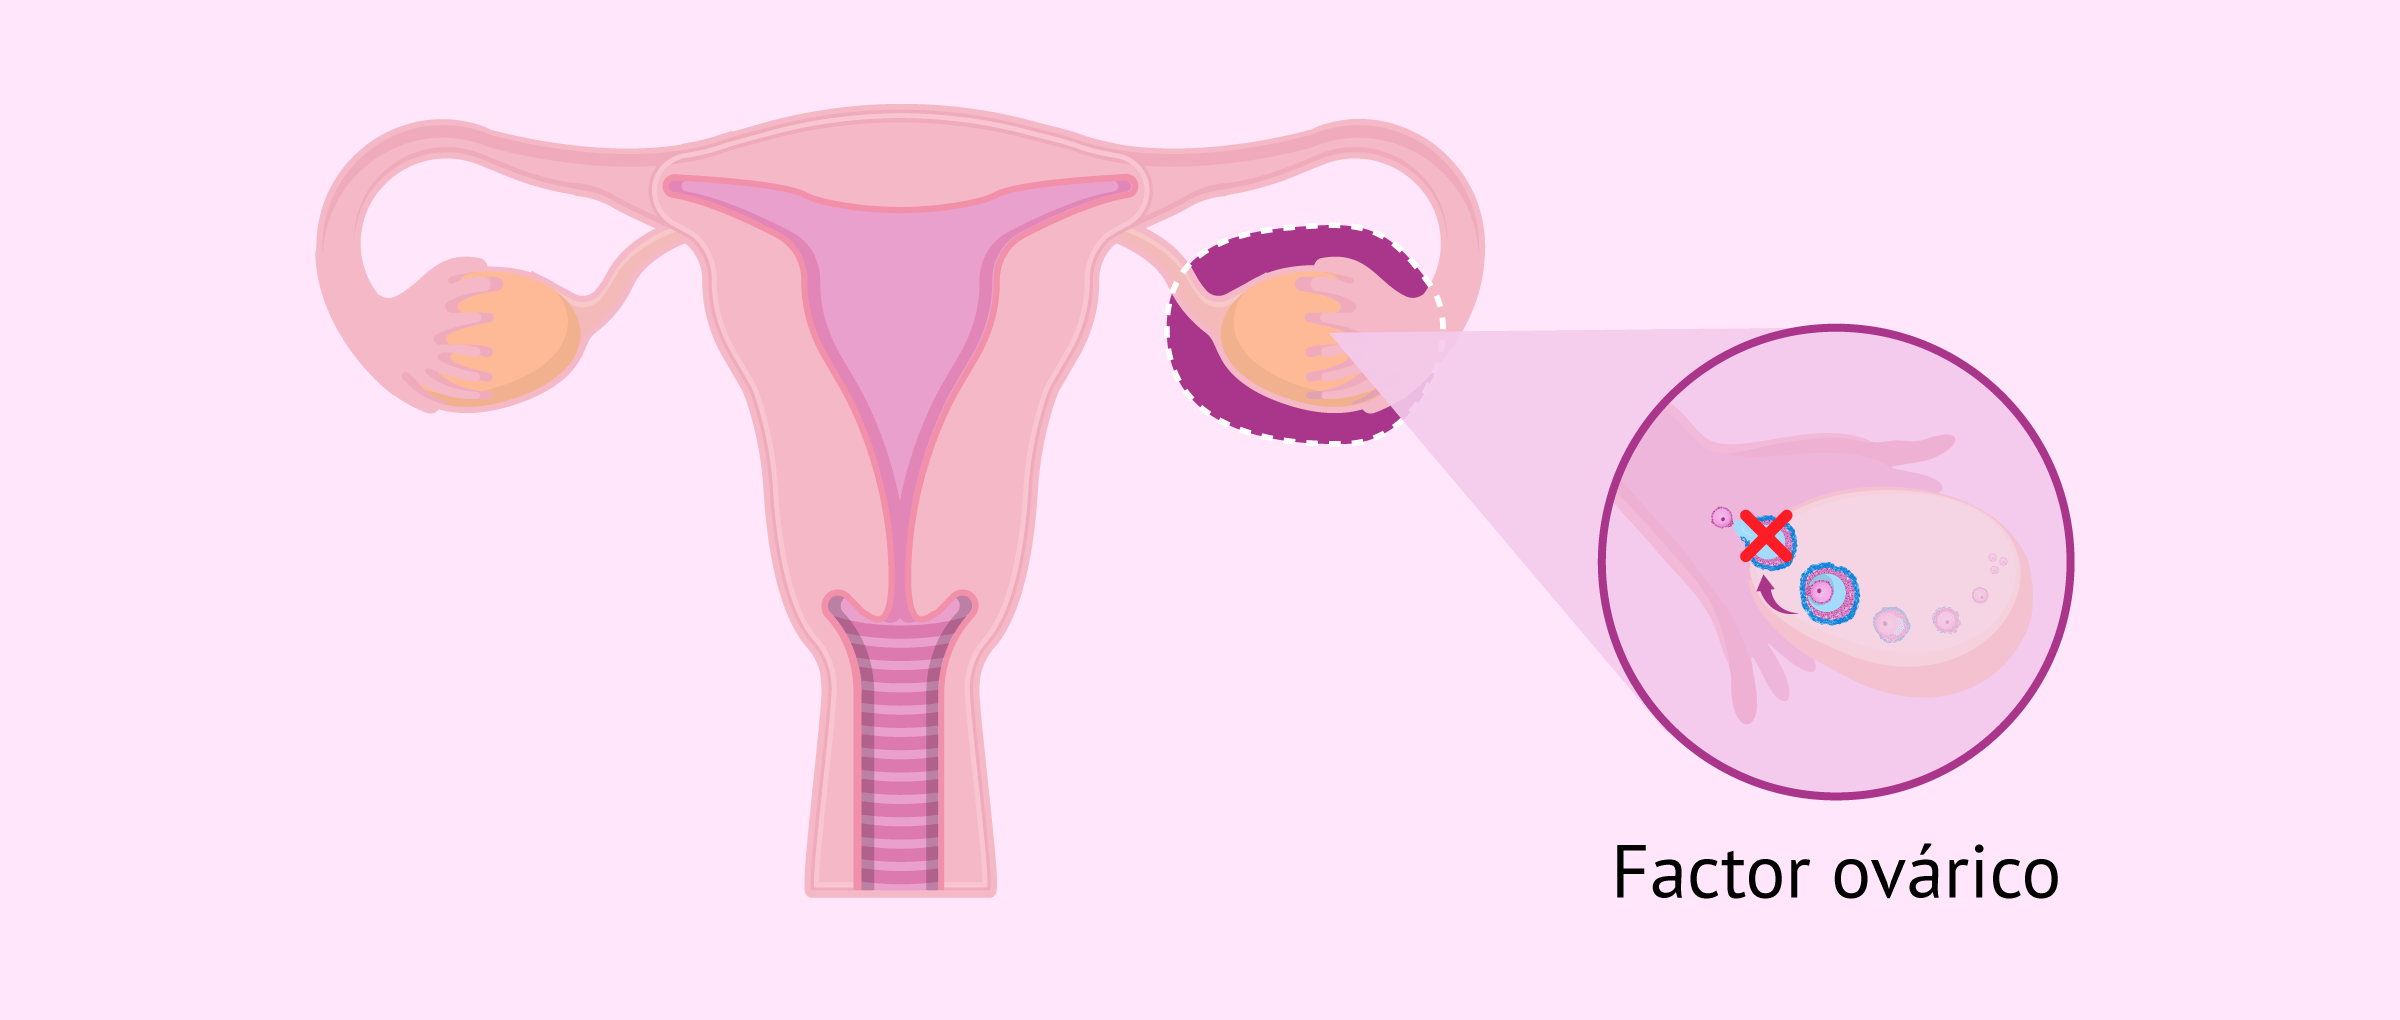 Infertilidad femenina por factor ovárico